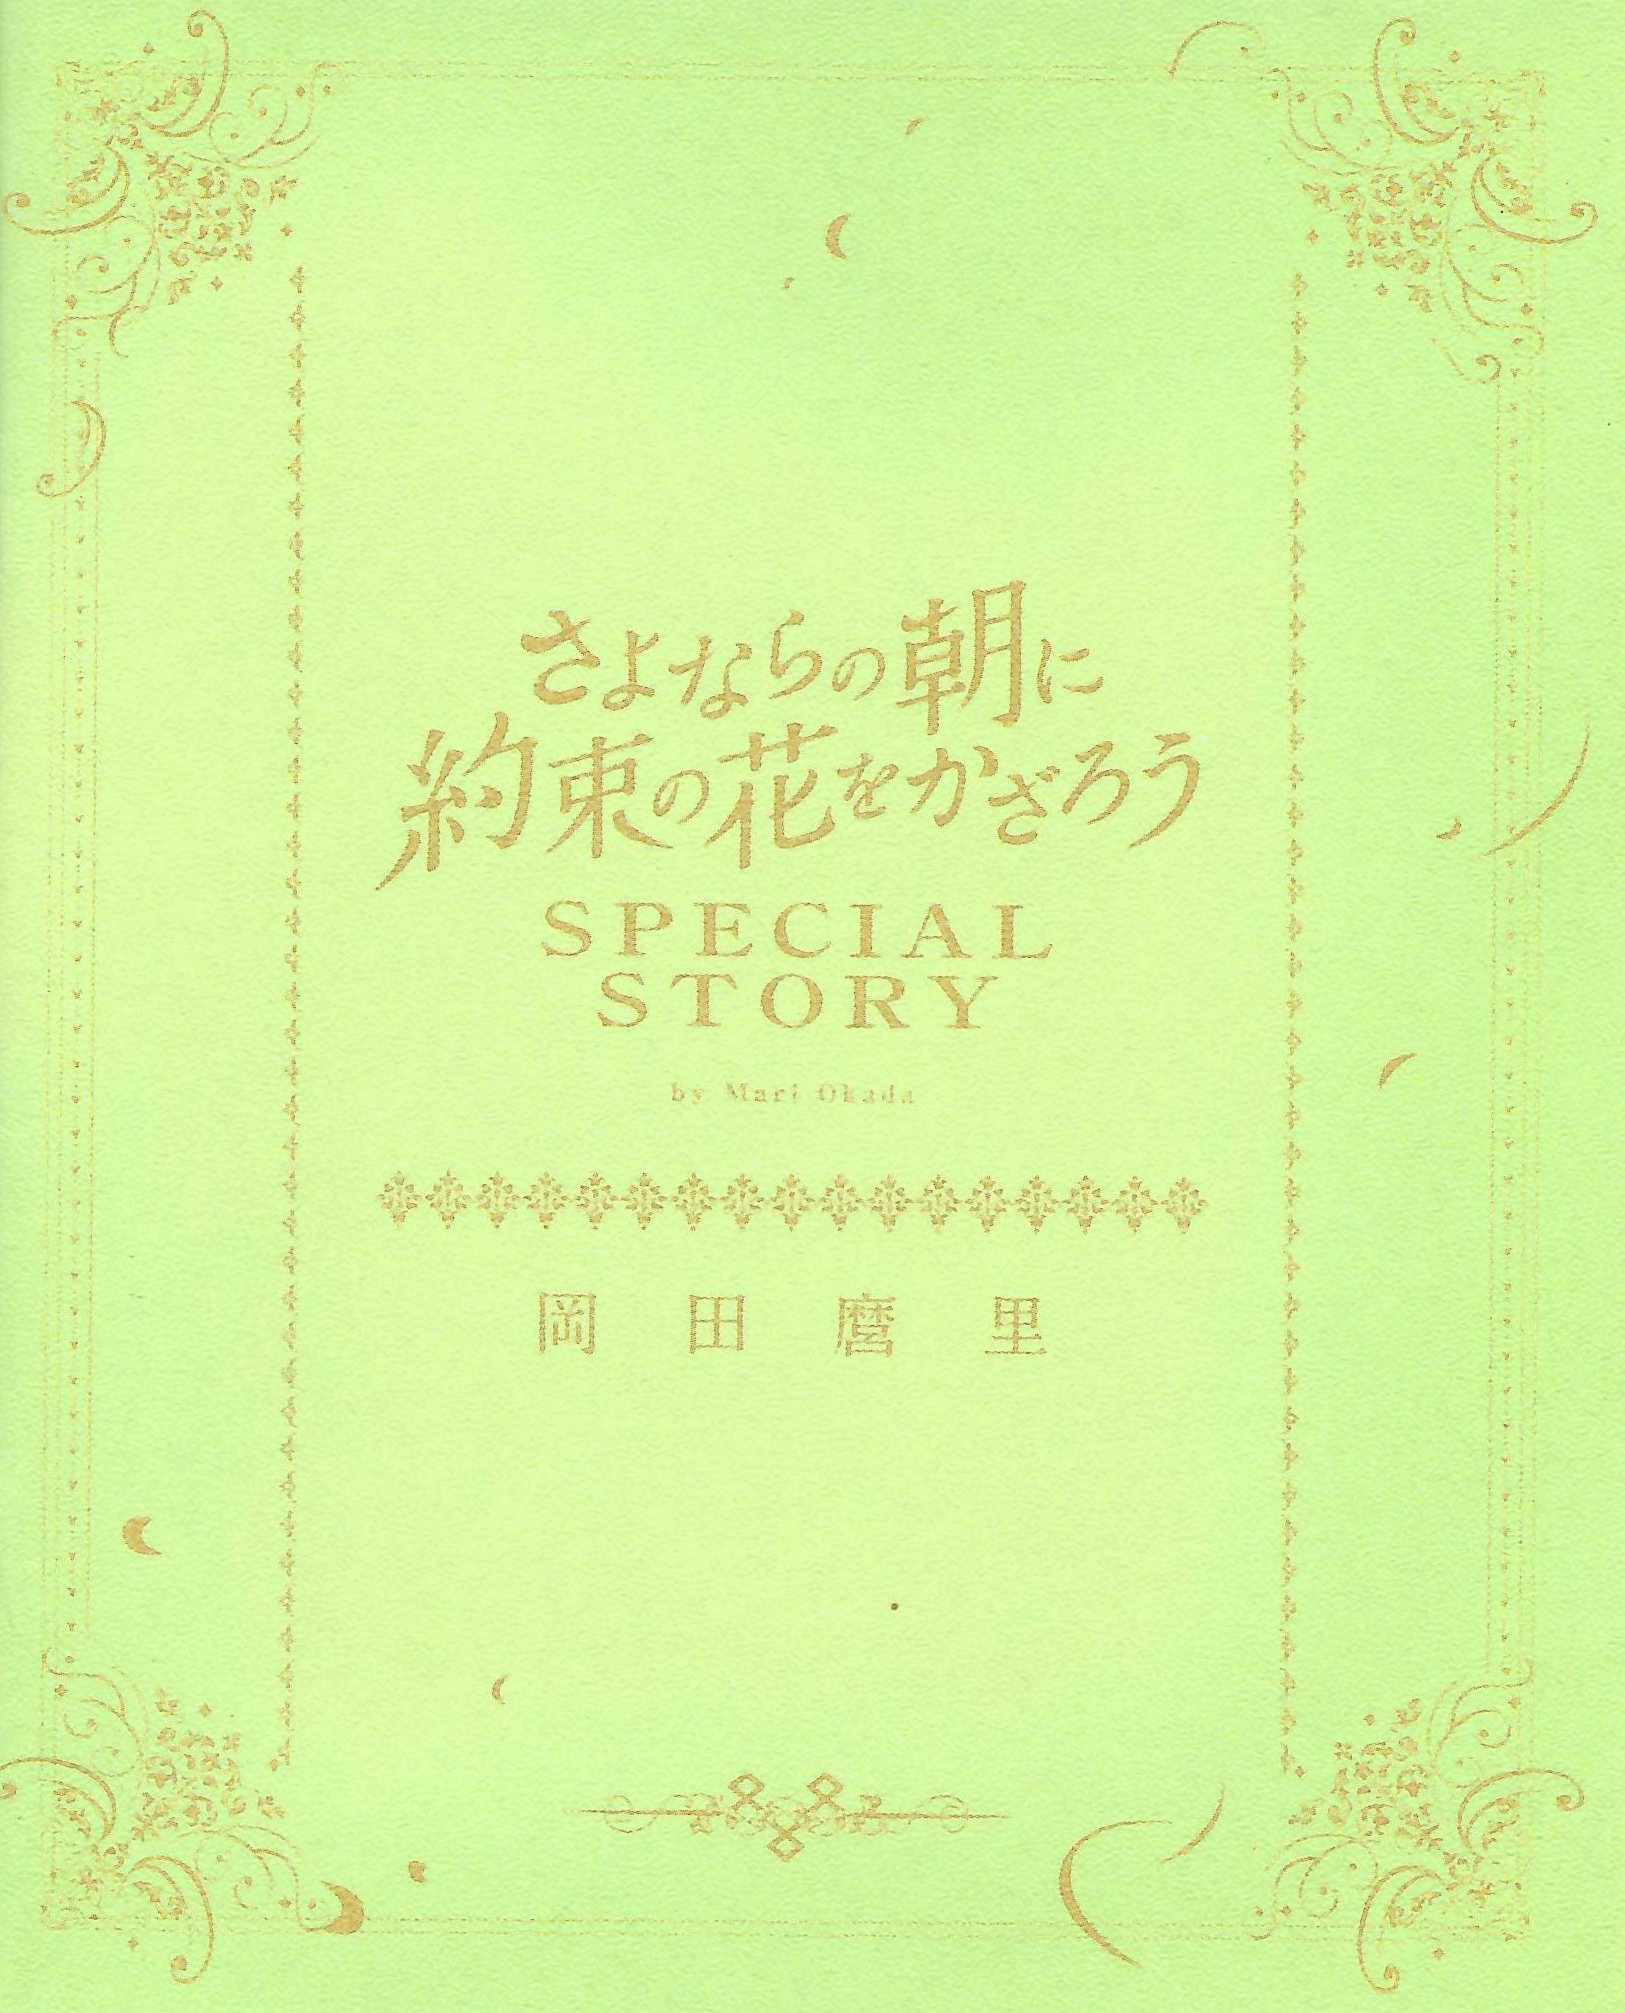 3 book by Mari Okada